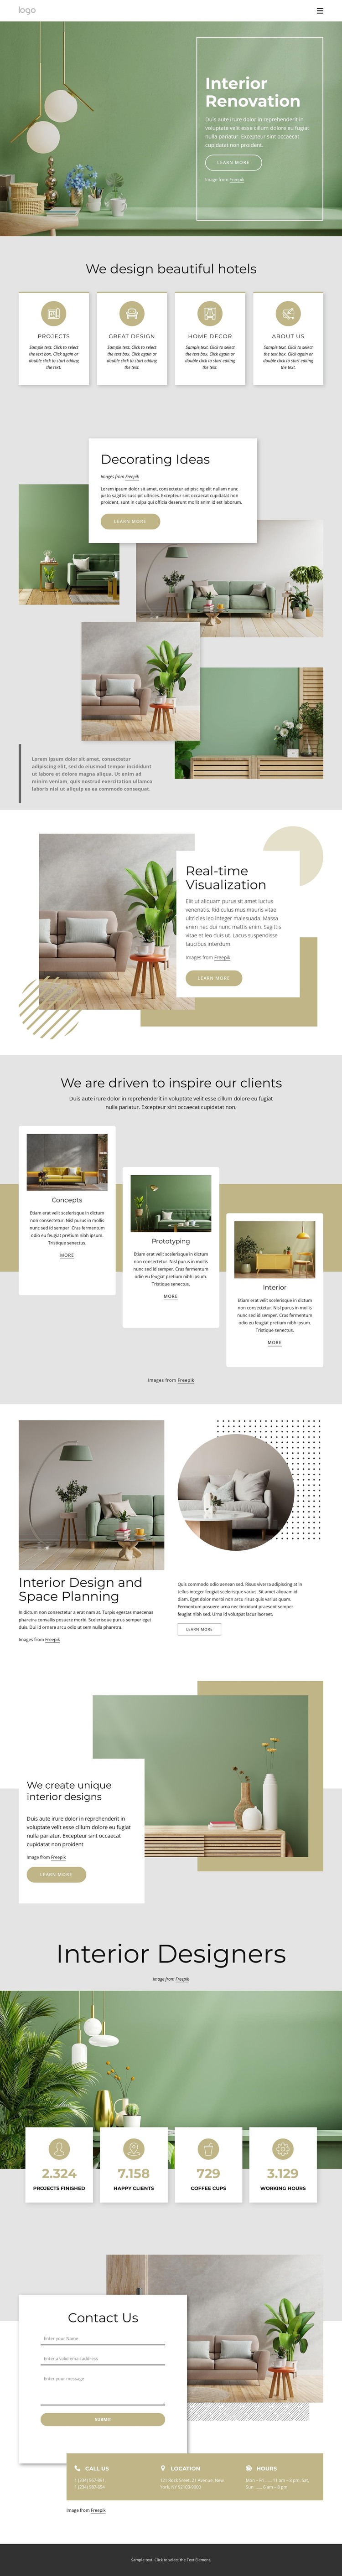 Architecture and interior design agency WordPress Theme